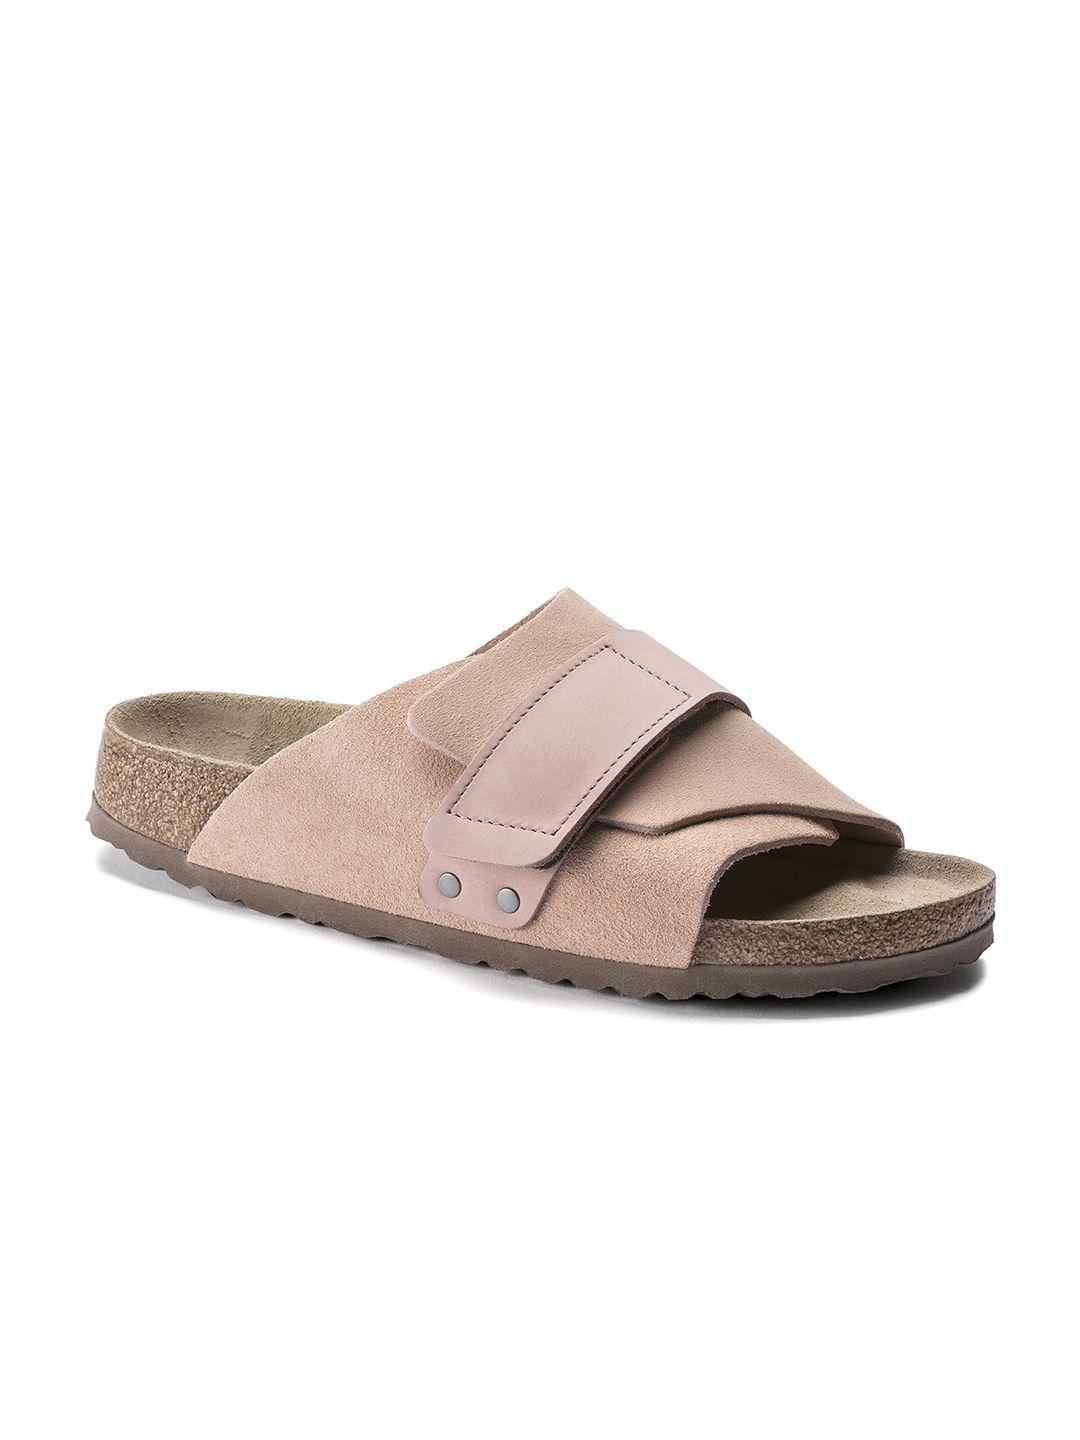 birkenstock unisex pink suede leather kyoto regular width sandals